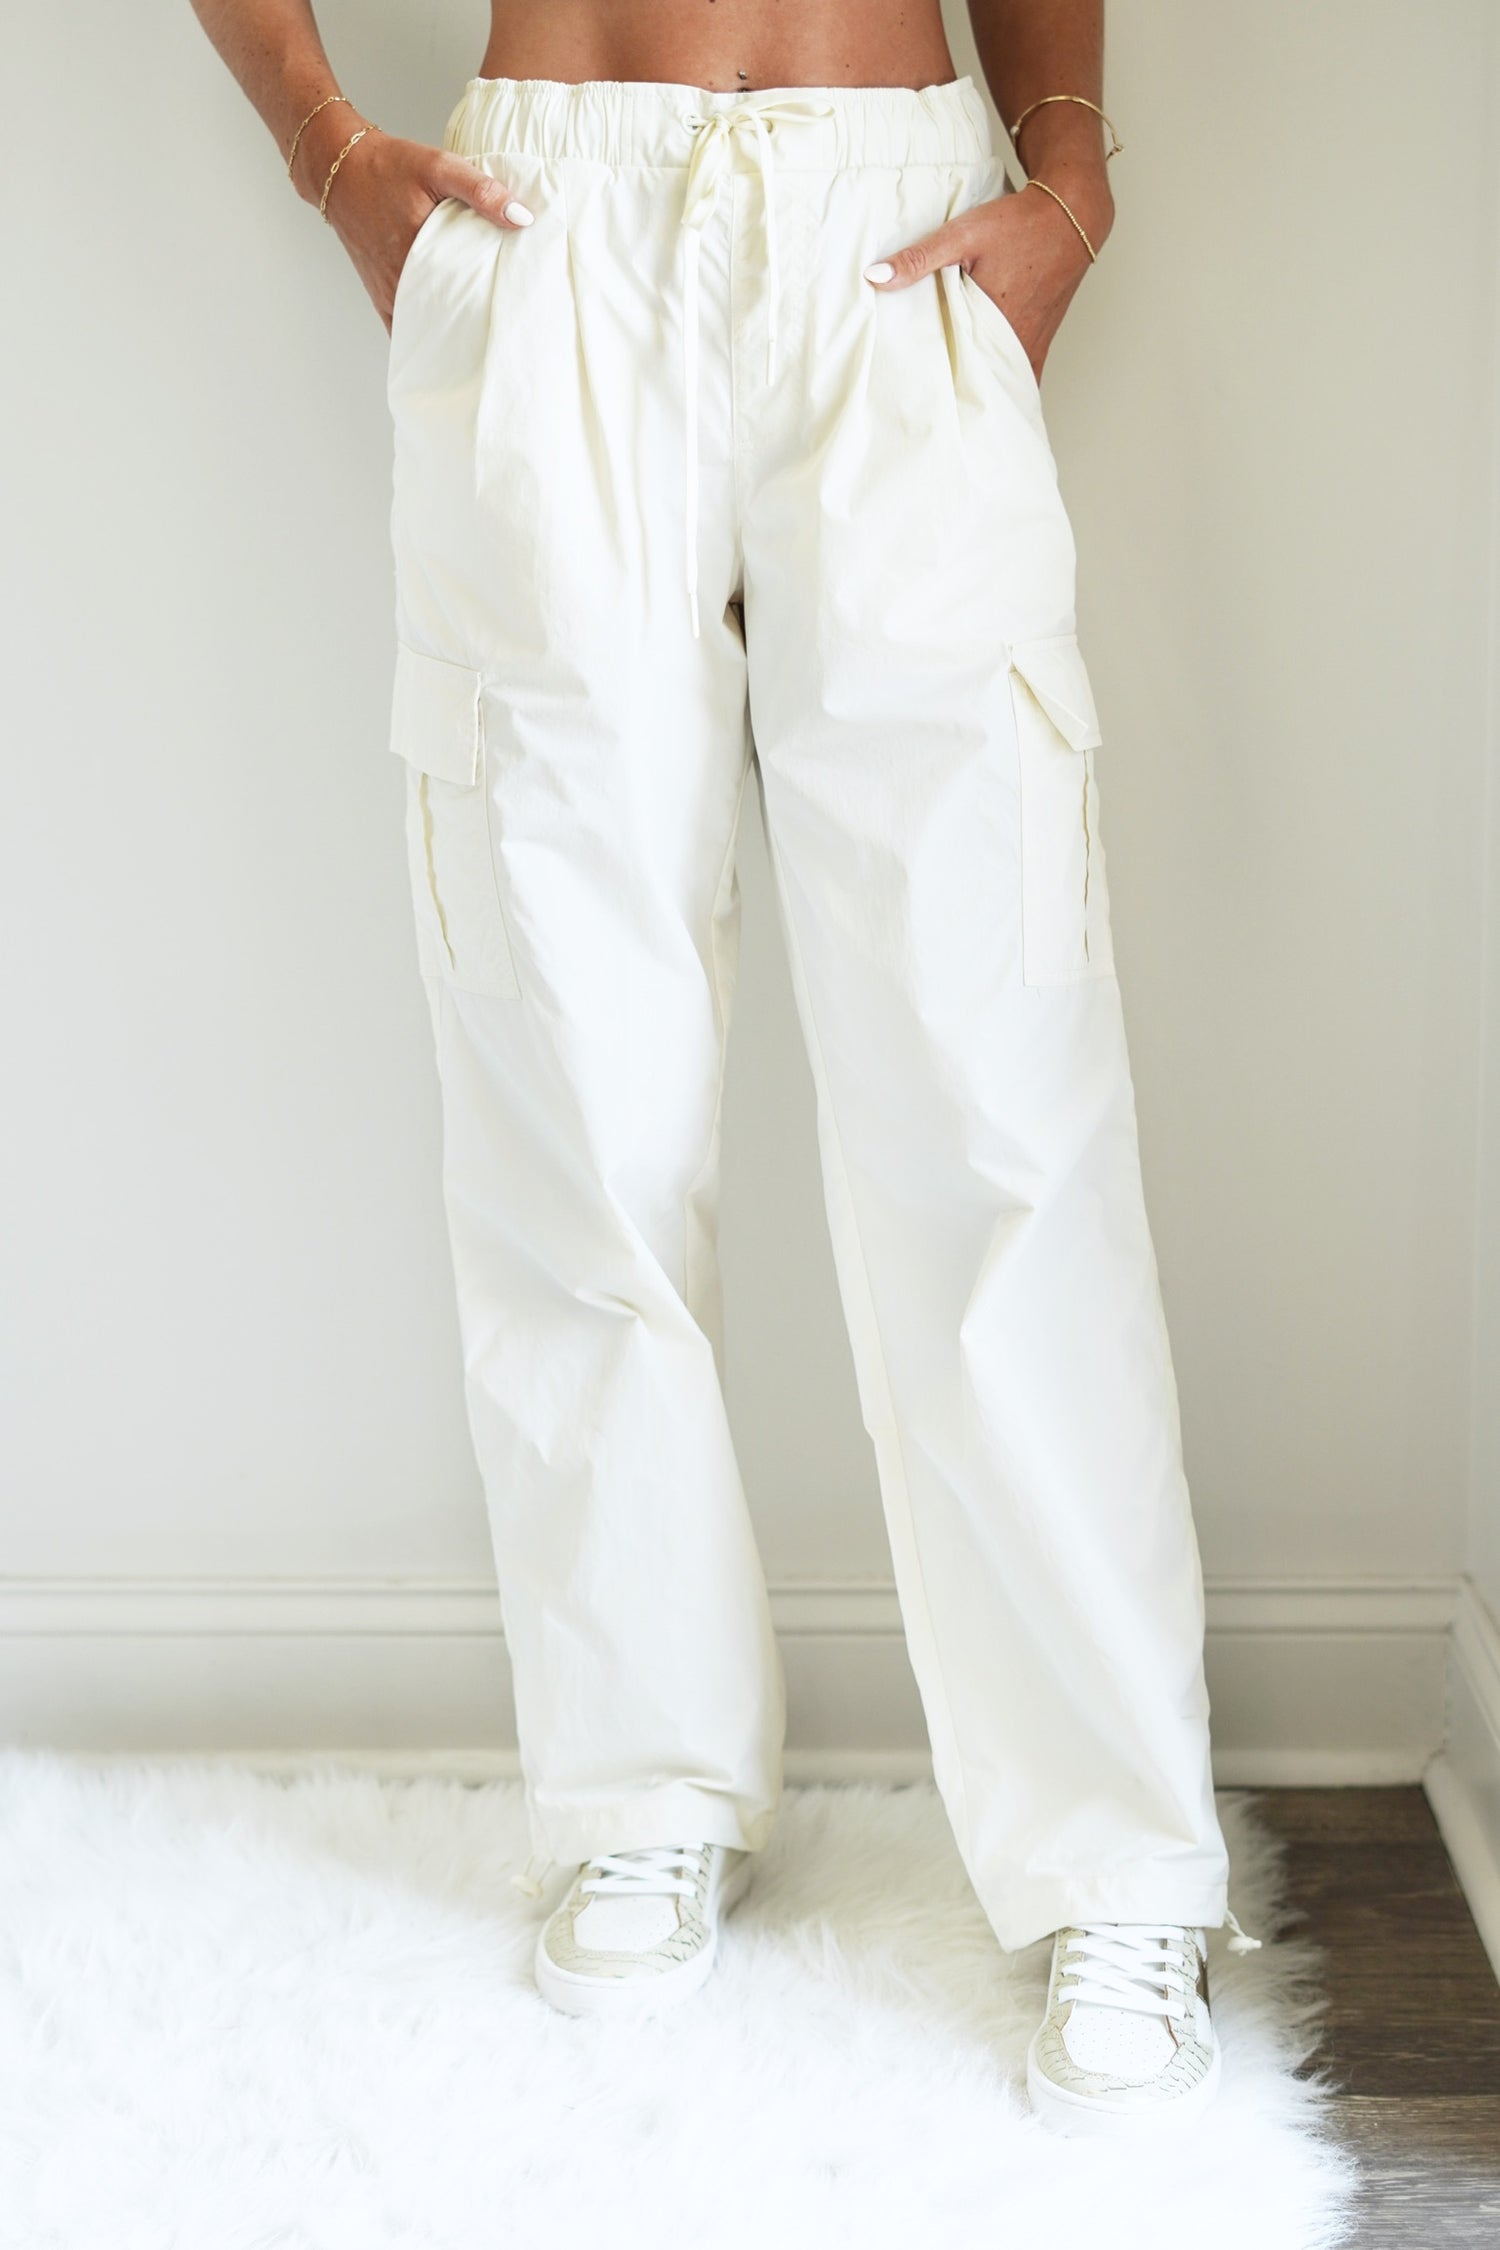 Best White Denim: Shorts, Skirts, Jackets & More